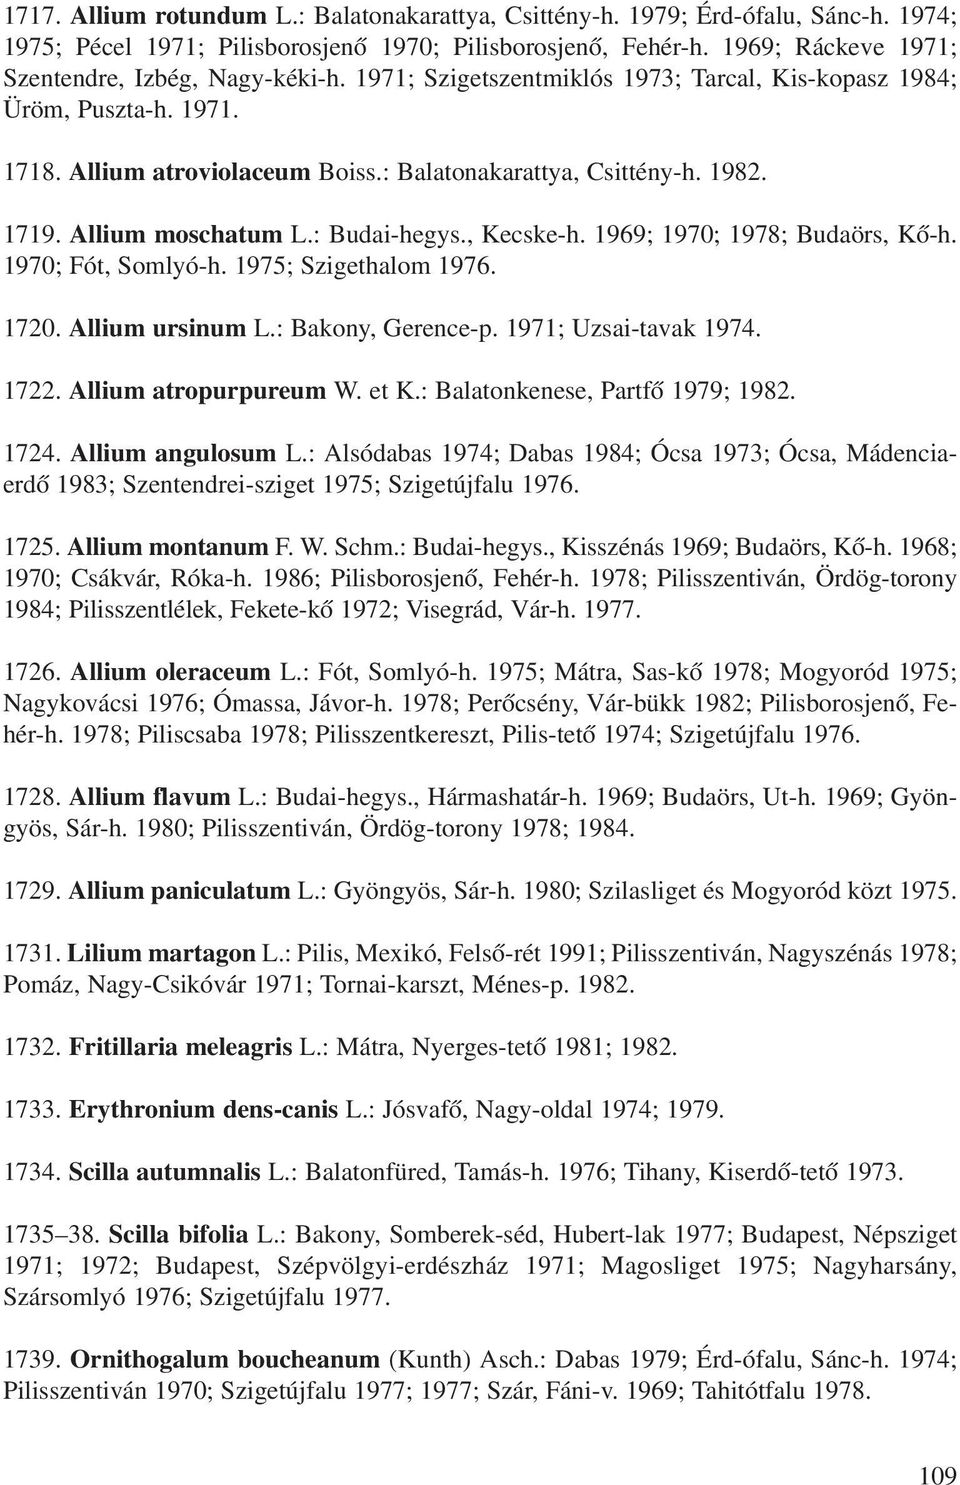 1719. Allium moschatum L.: Budai-hegys., Kecske-h. 1969; 1970; 1978; Budaörs, Kô-h. 1970; Fót, Somlyó-h. 1975; Szigethalom 1976. 1720. Allium ursinum L.: Bakony, Gerence-p. 1971; Uzsai-tavak 1974.